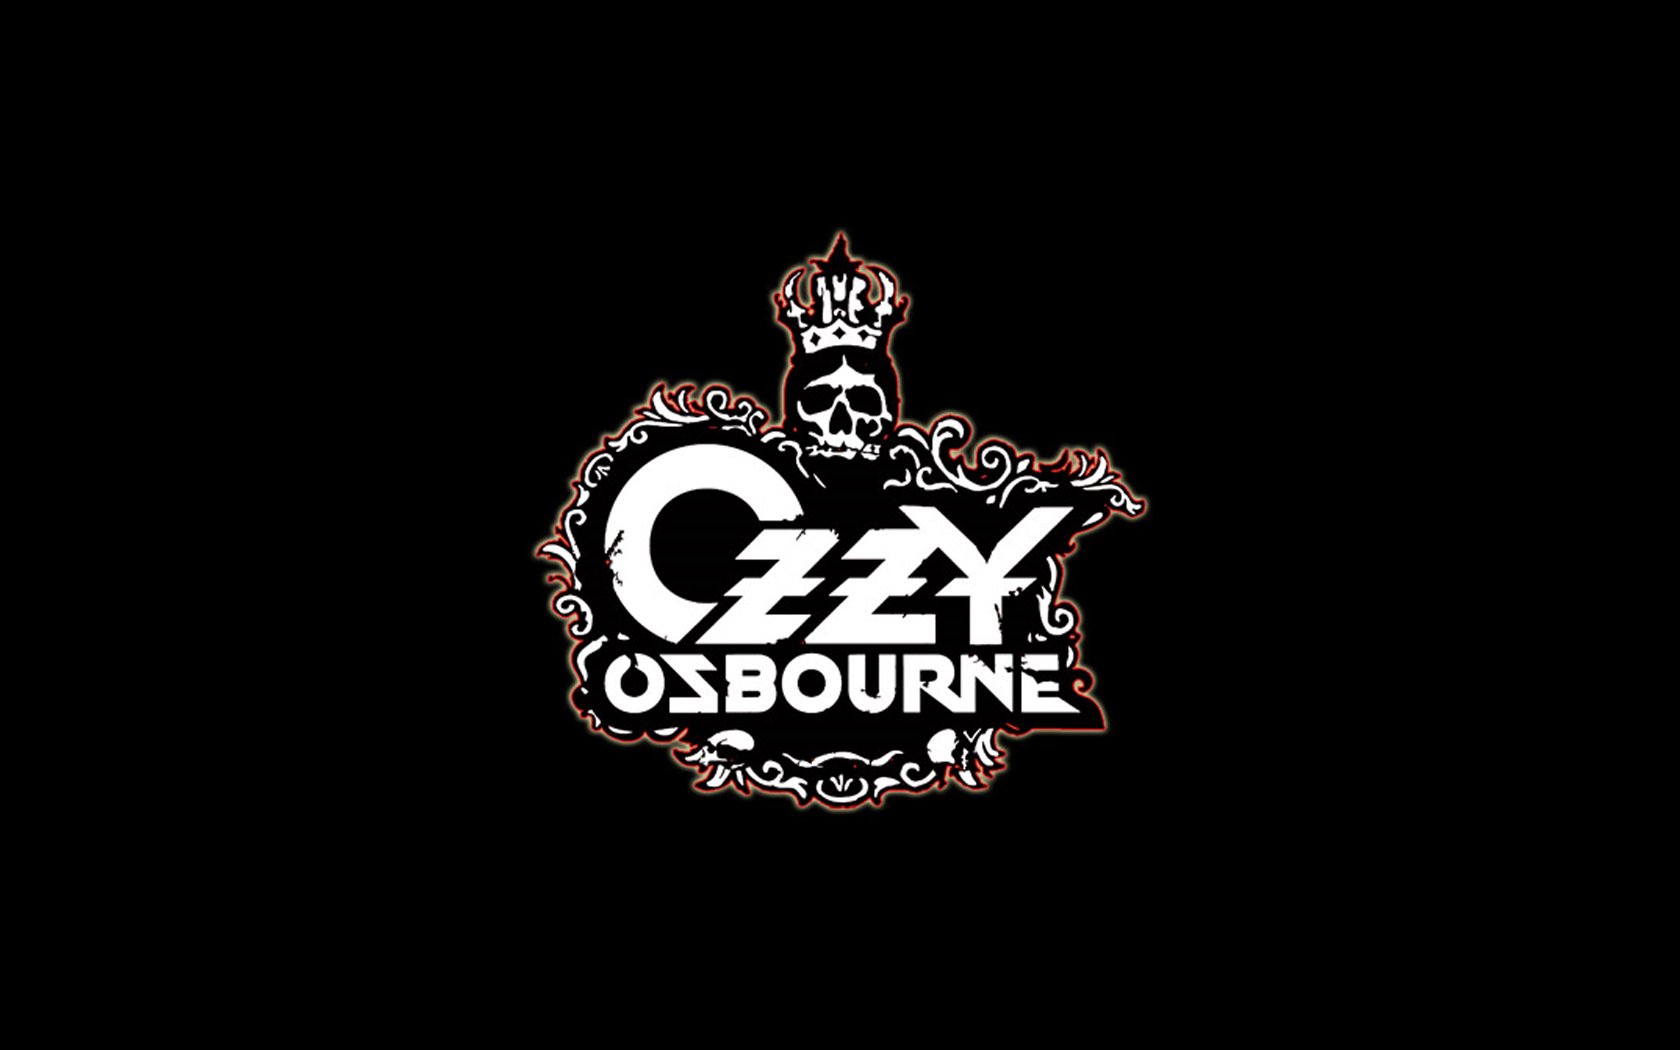 Ozzy Osbourne Wallpapers  Top Free Ozzy Osbourne Backgrounds   WallpaperAccess